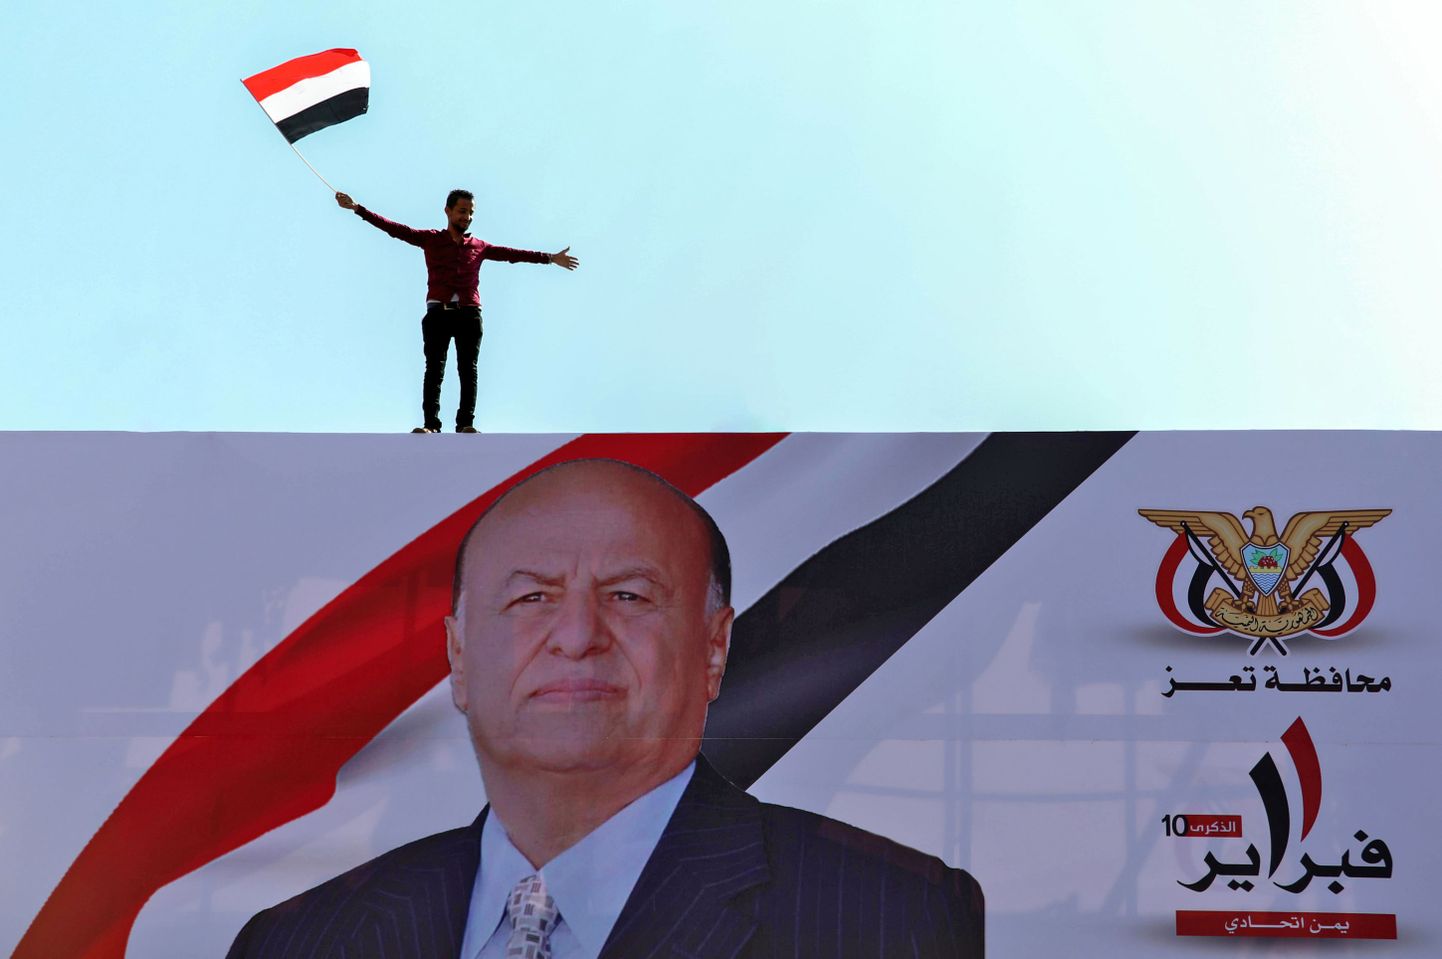 Abedrabbo Mansour Hadi valimisplakatil